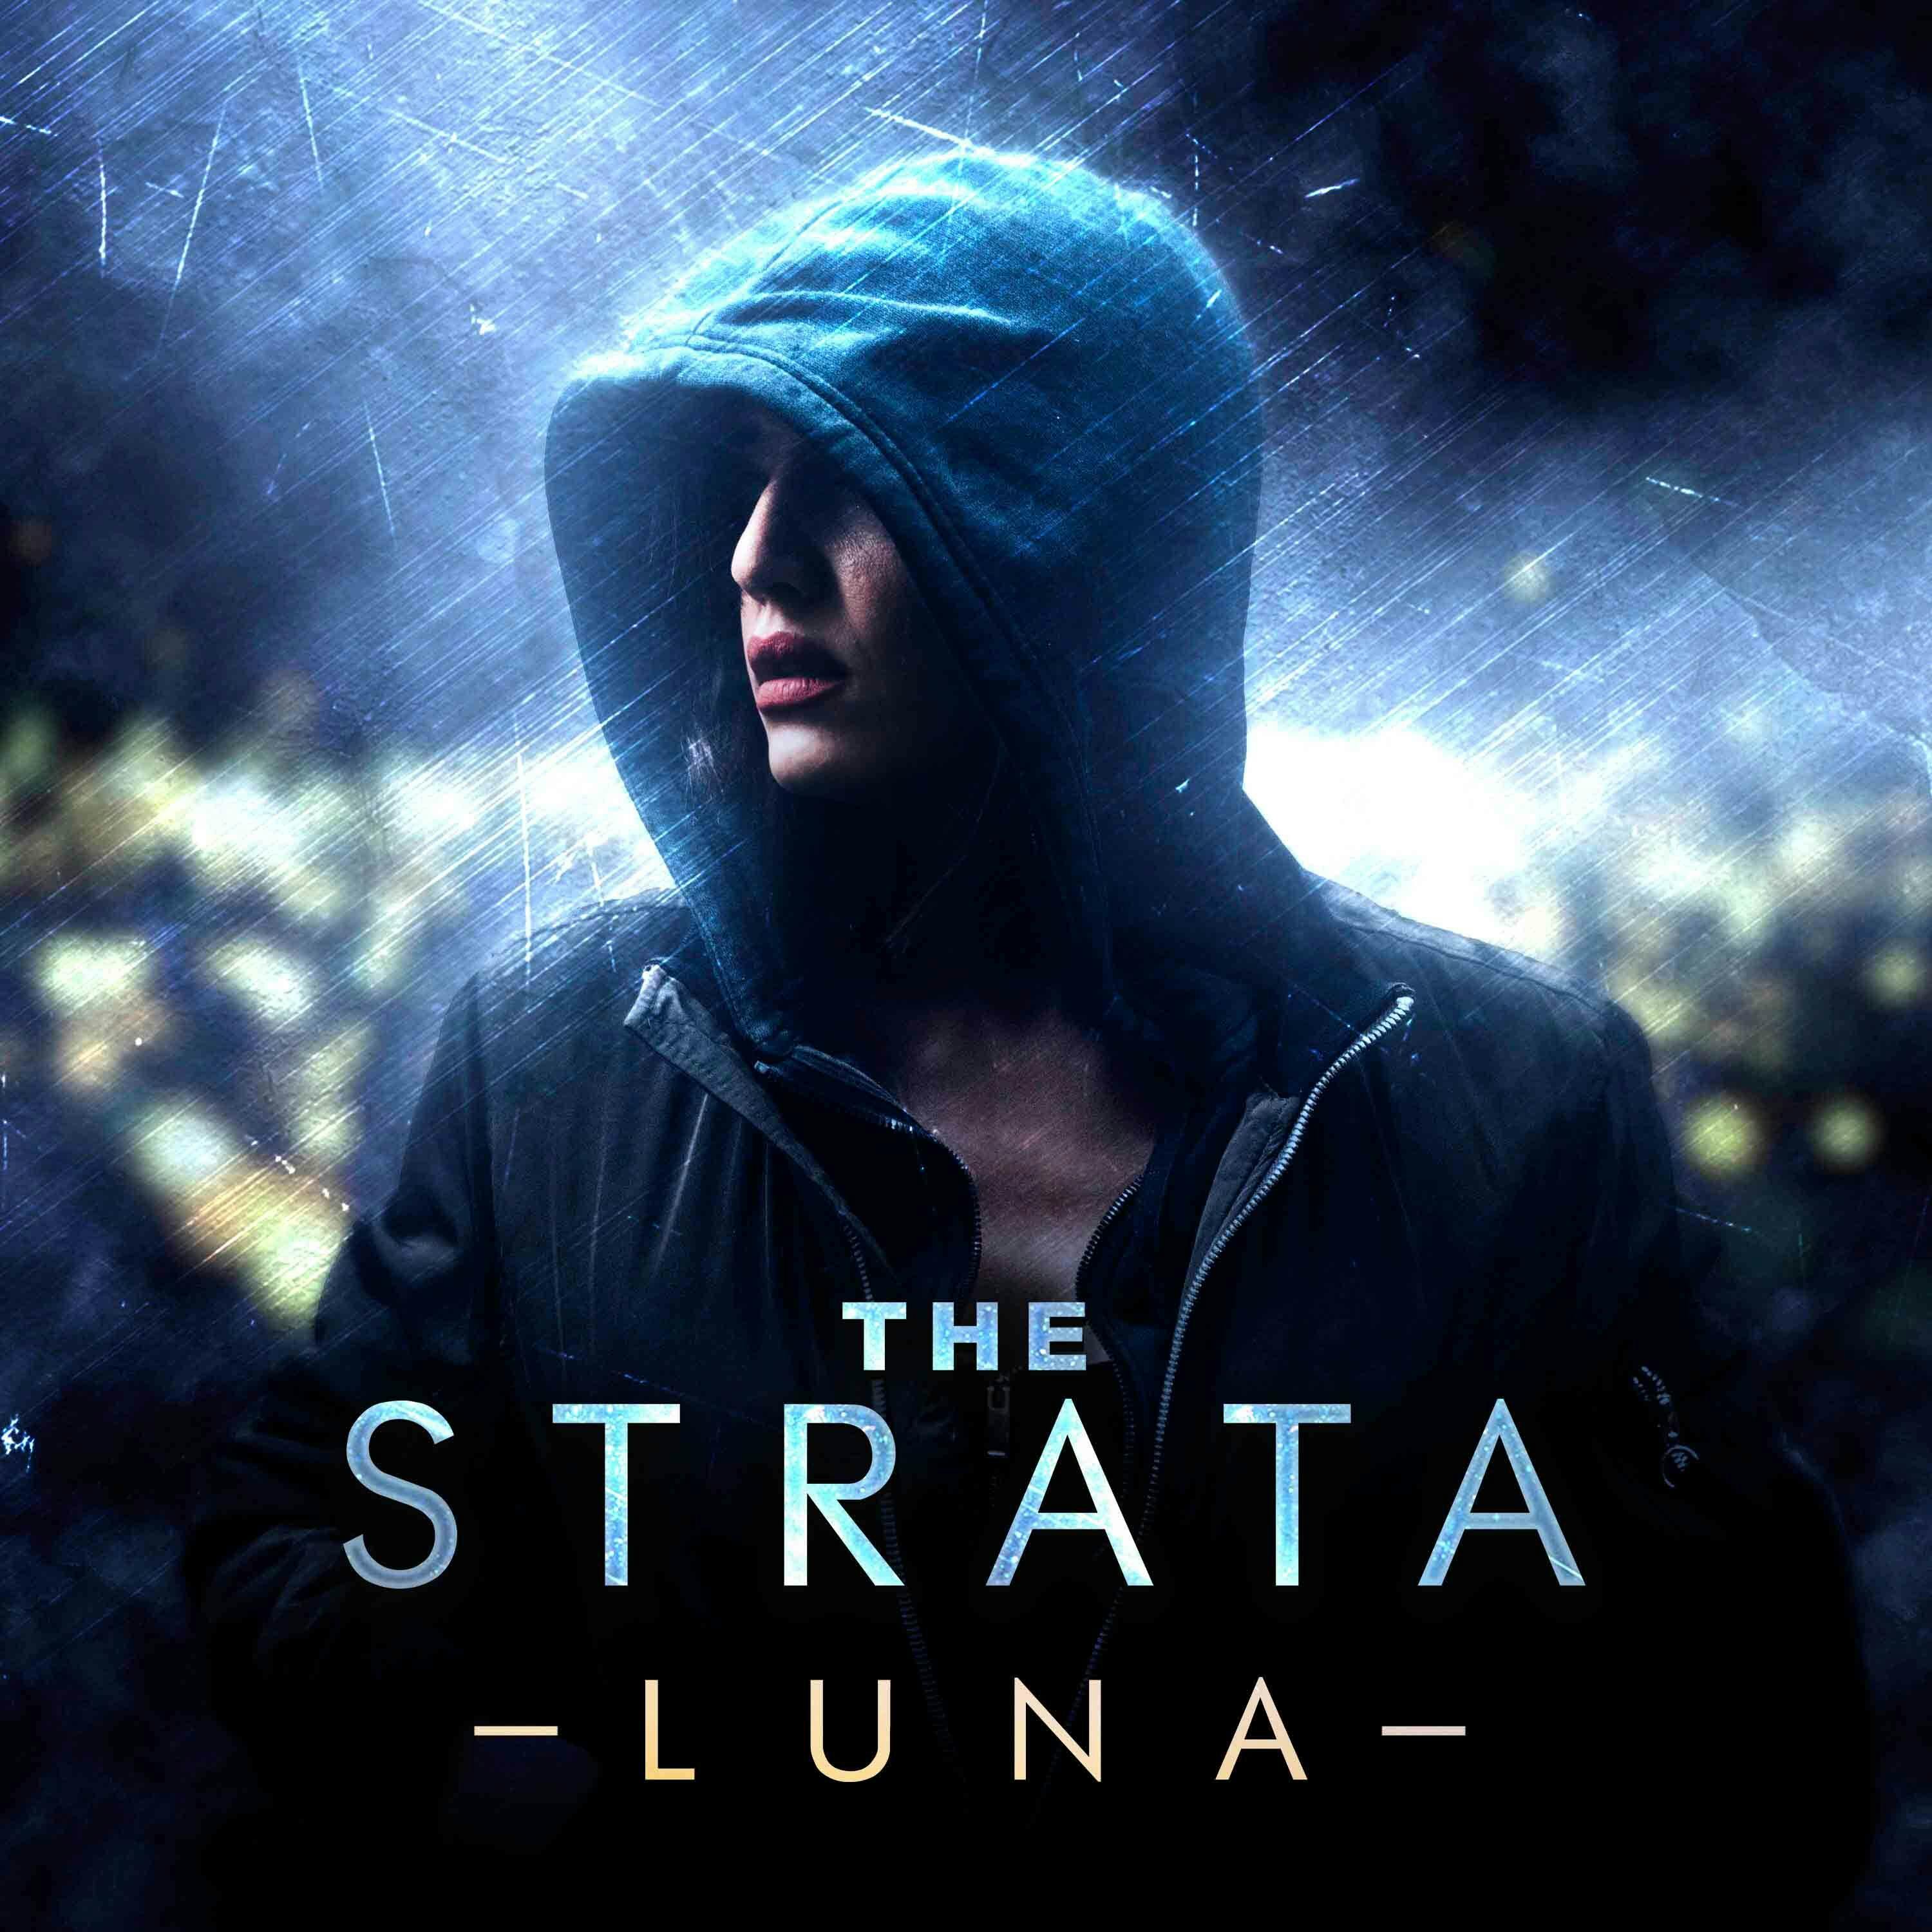 The Strata - Luna - Introduction